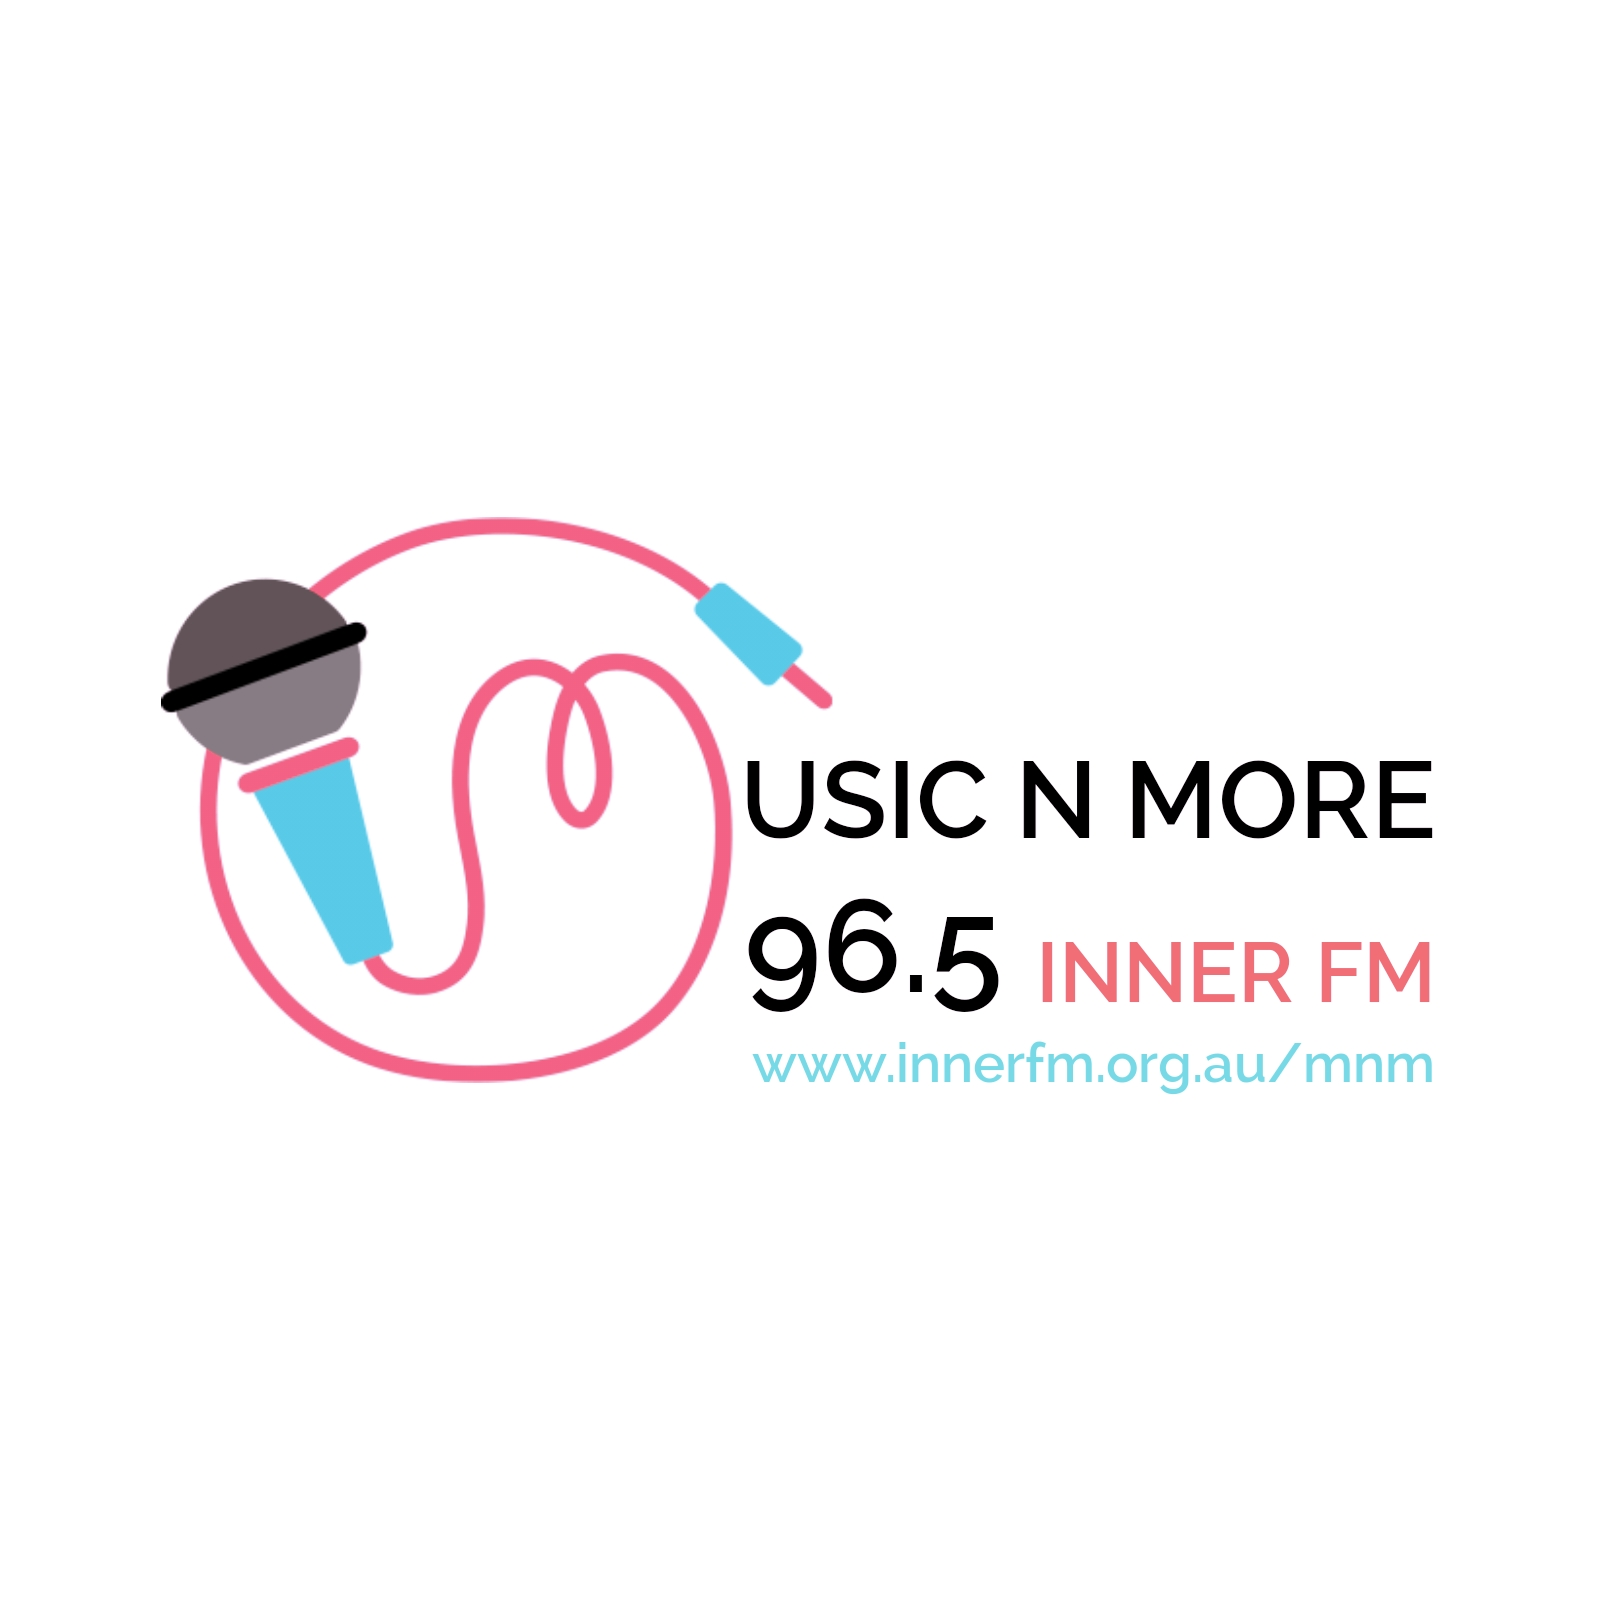 Music N More (MnM) 96.5 Inner FM, Melbourne, AU 3-December-2023